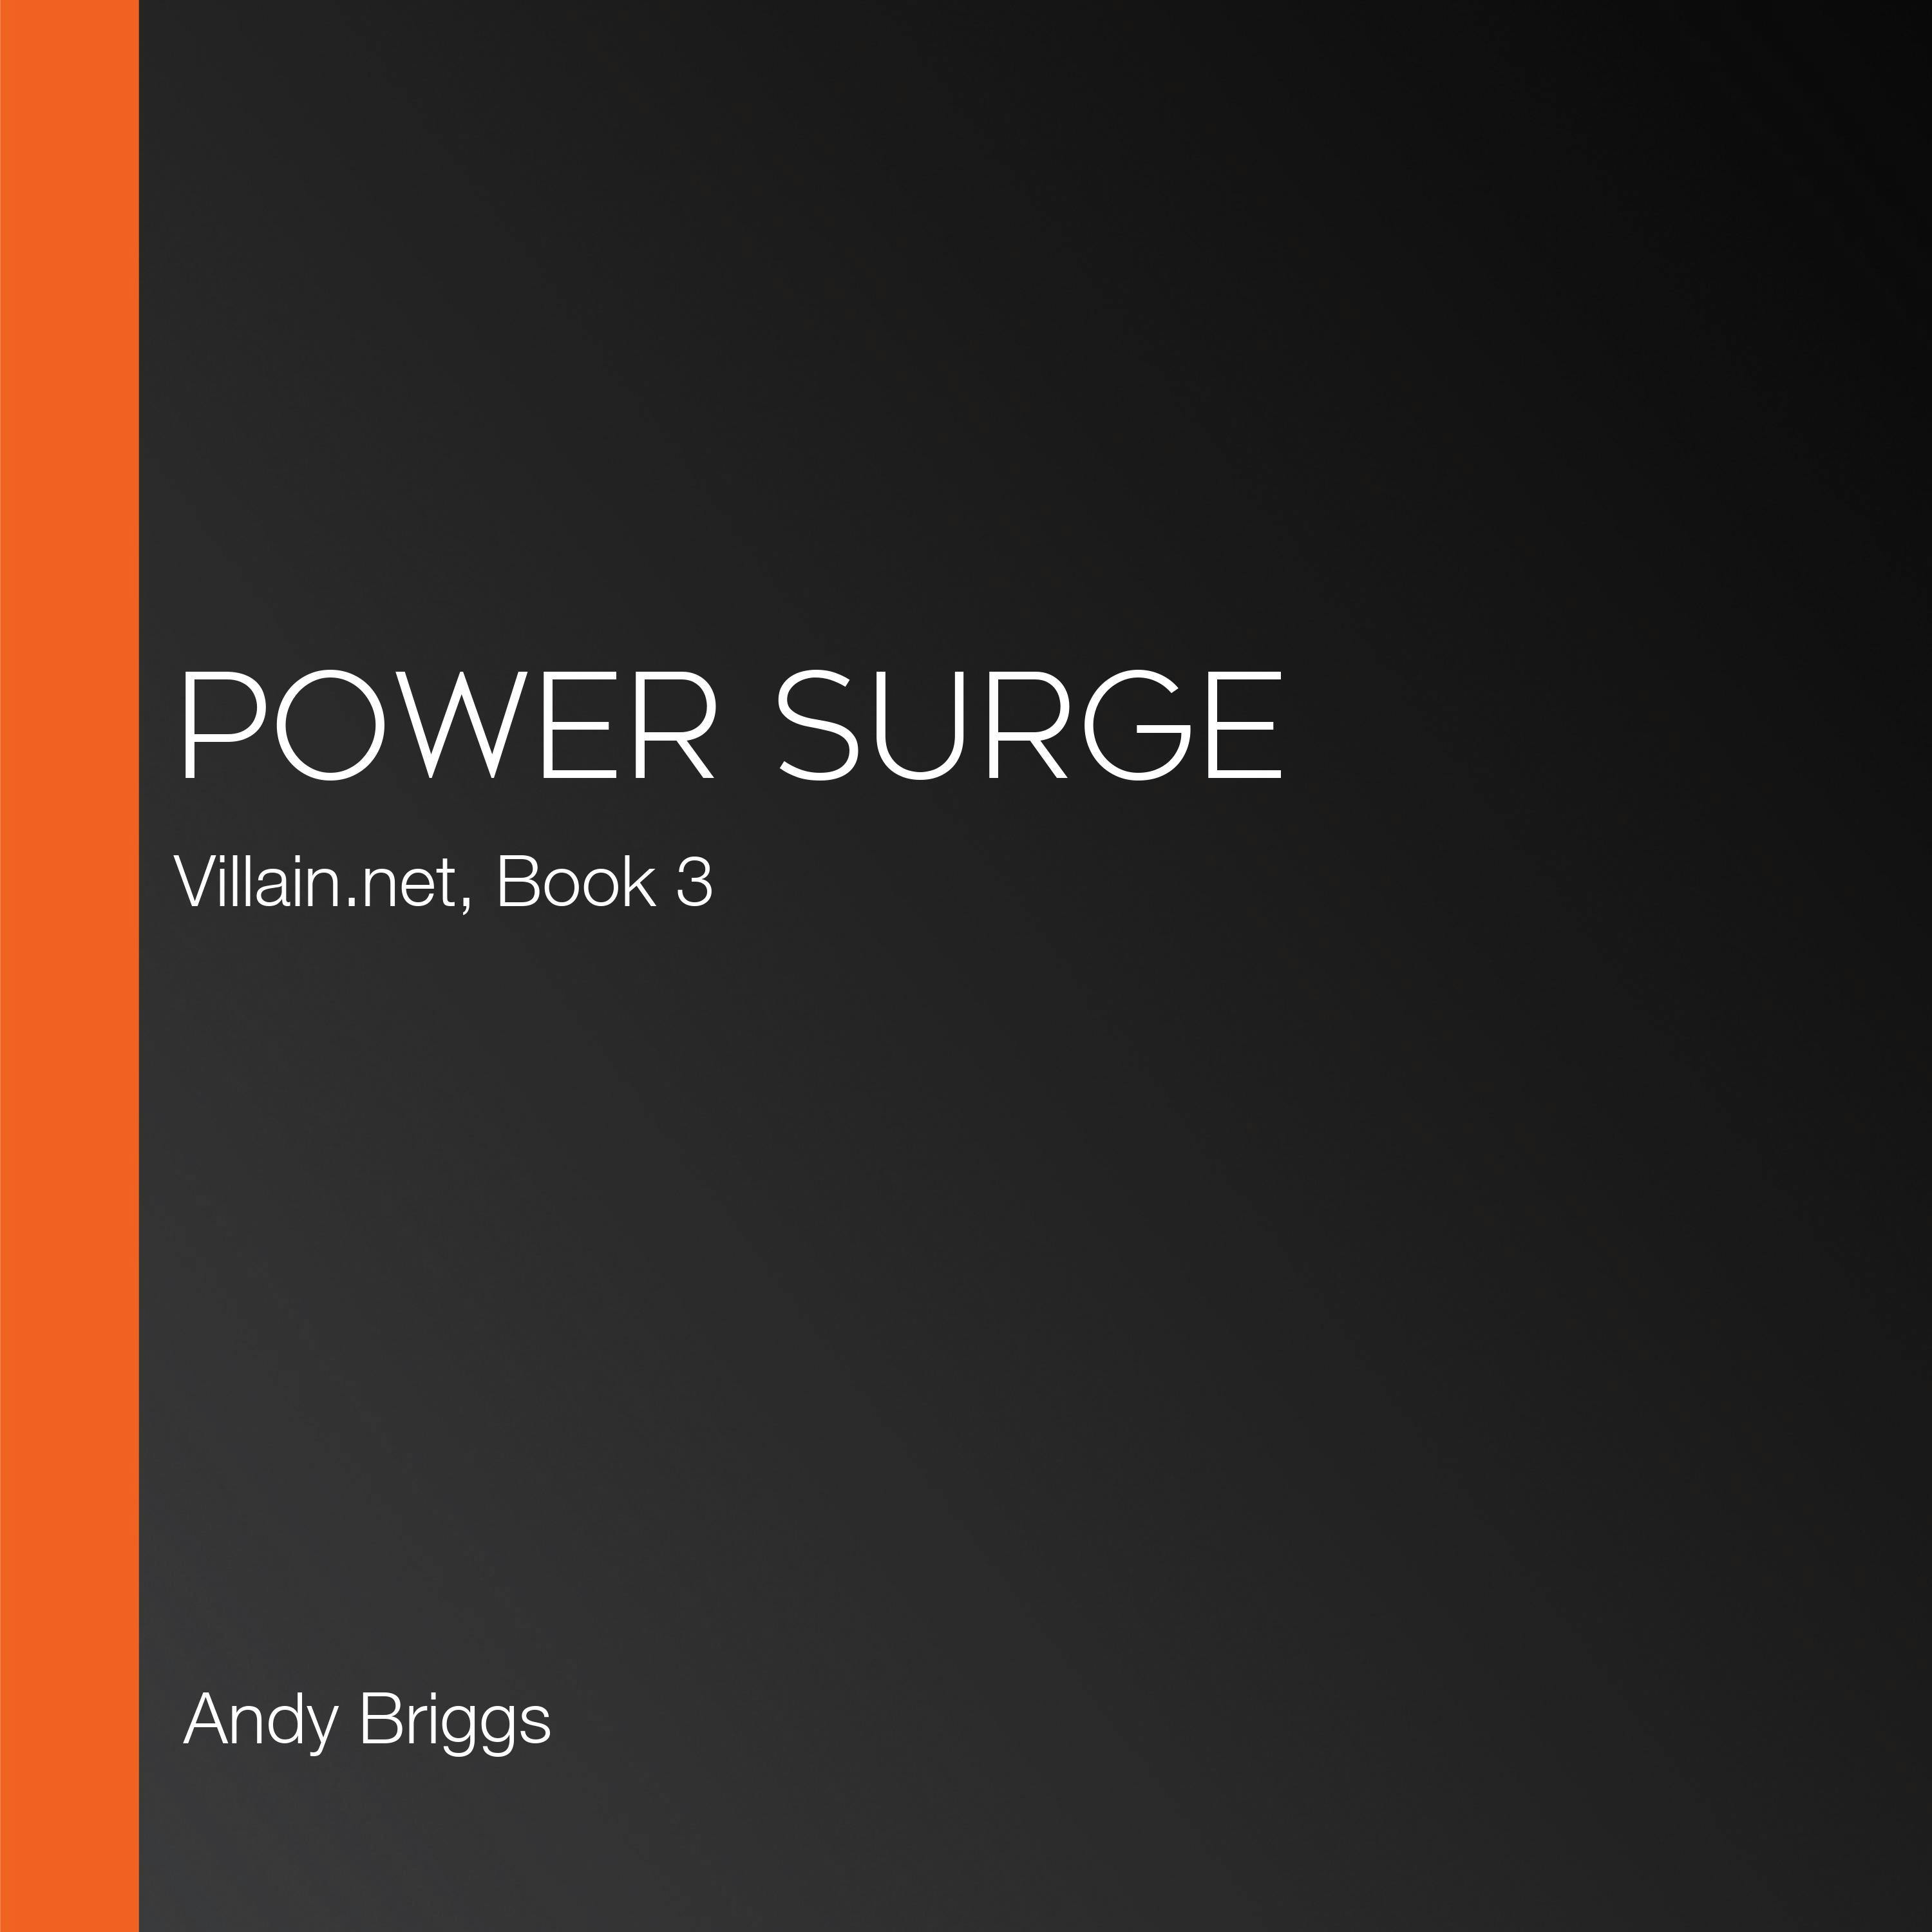 Power Surge: Villain.net, Book 3 - Andy Briggs